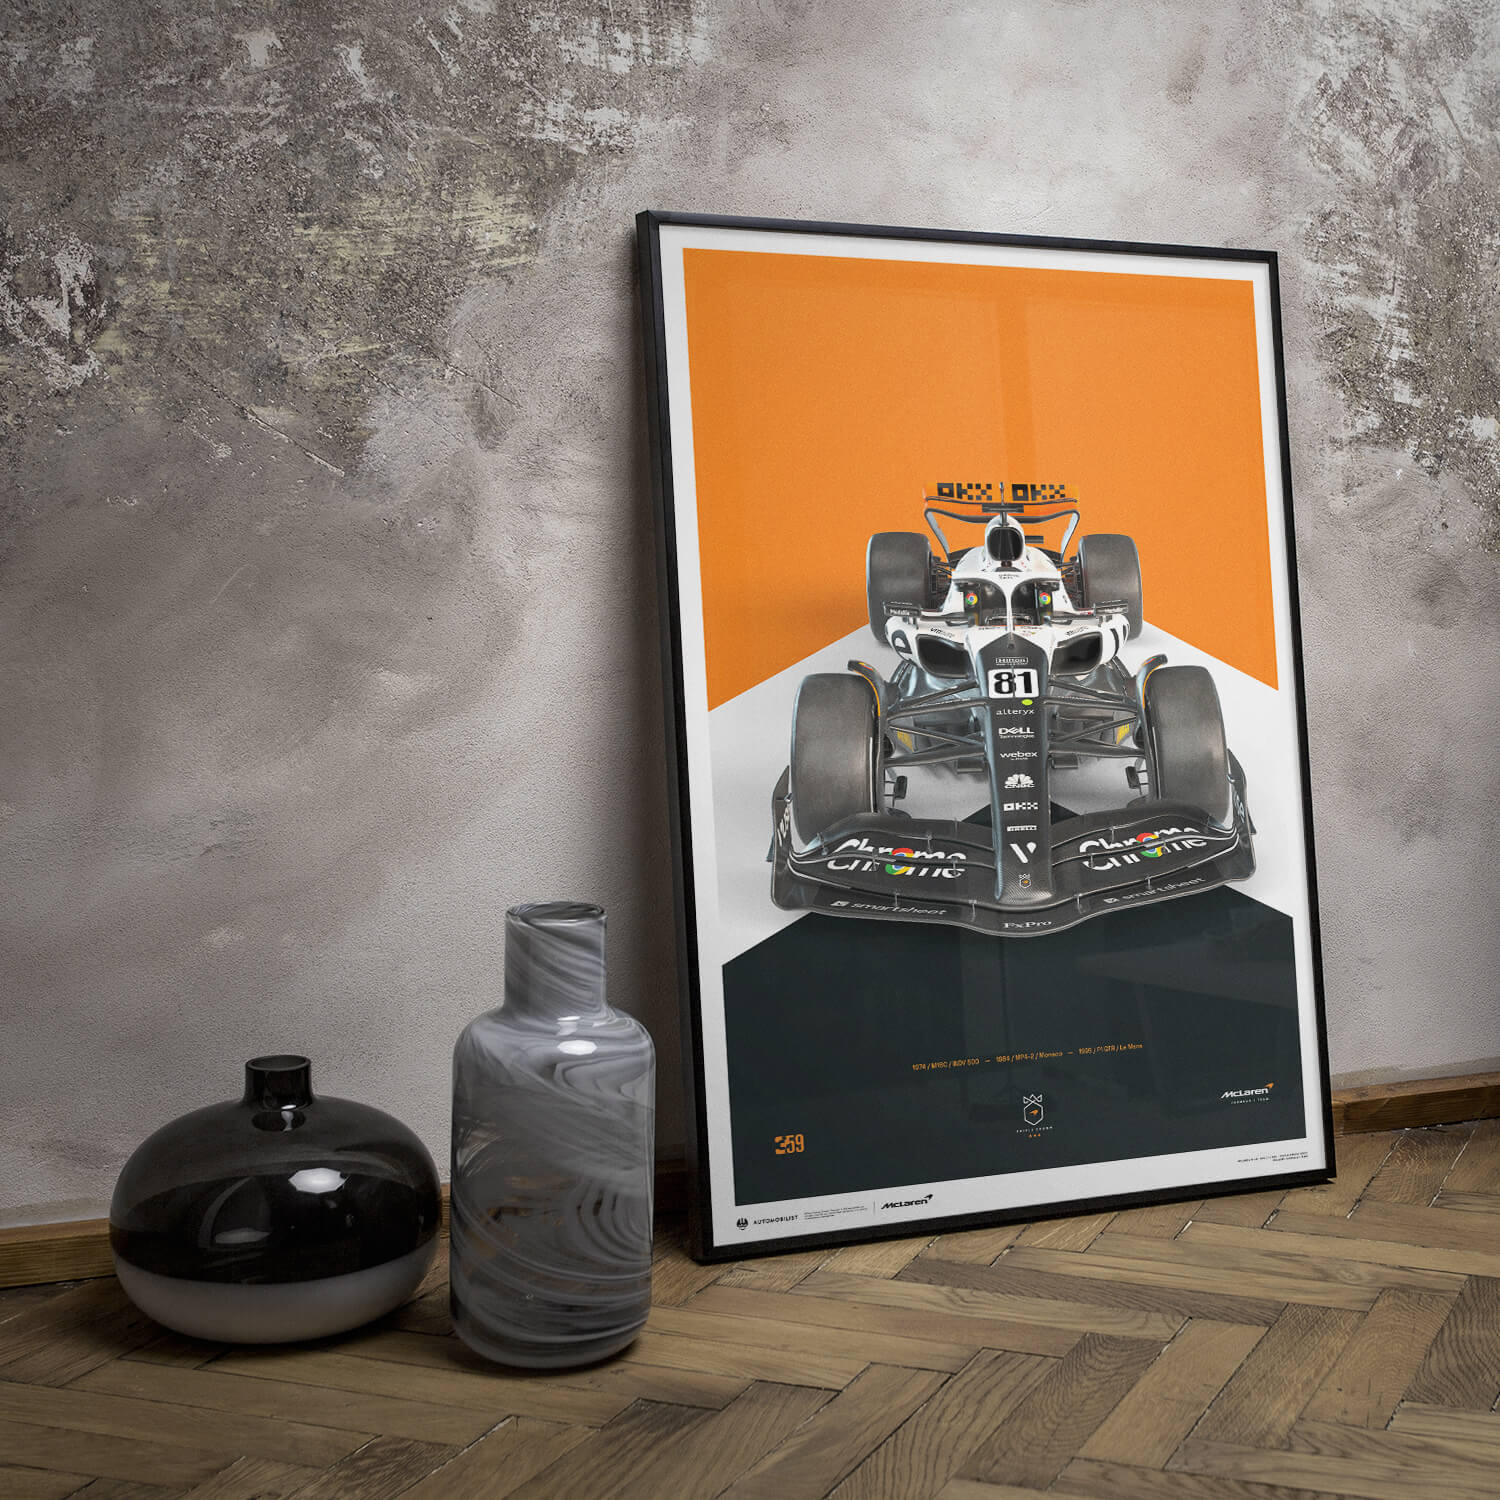 McLaren Formula 1 Team - Oscar Piastri - The Triple Crown Livery - 60th Anniversary - 2023